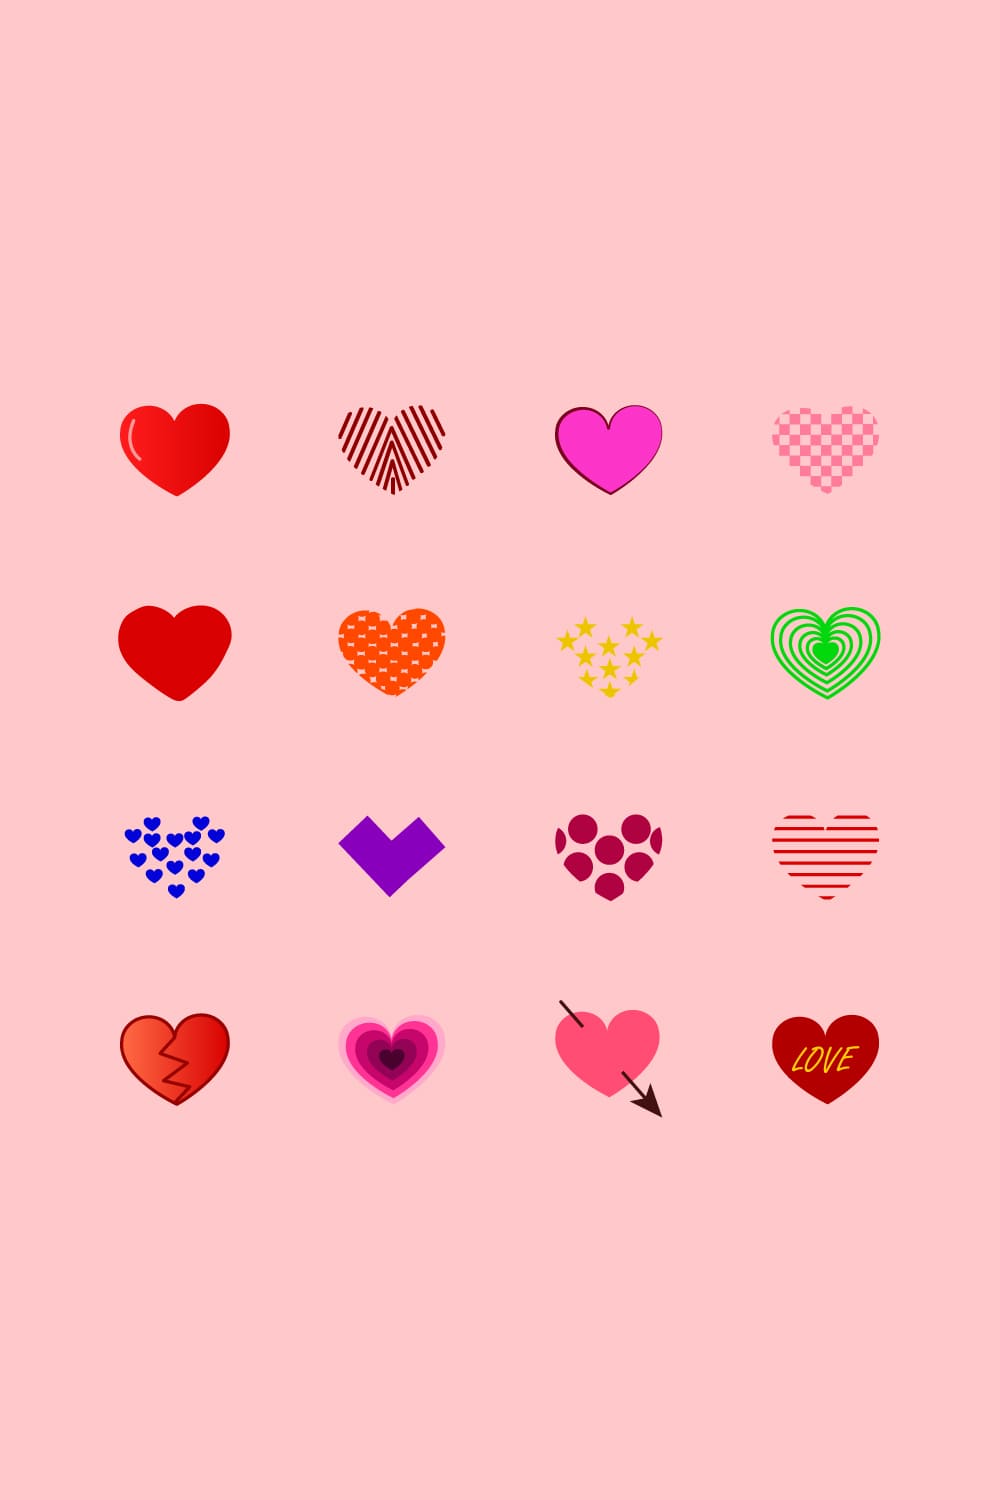 Heart Icons Pinterest.